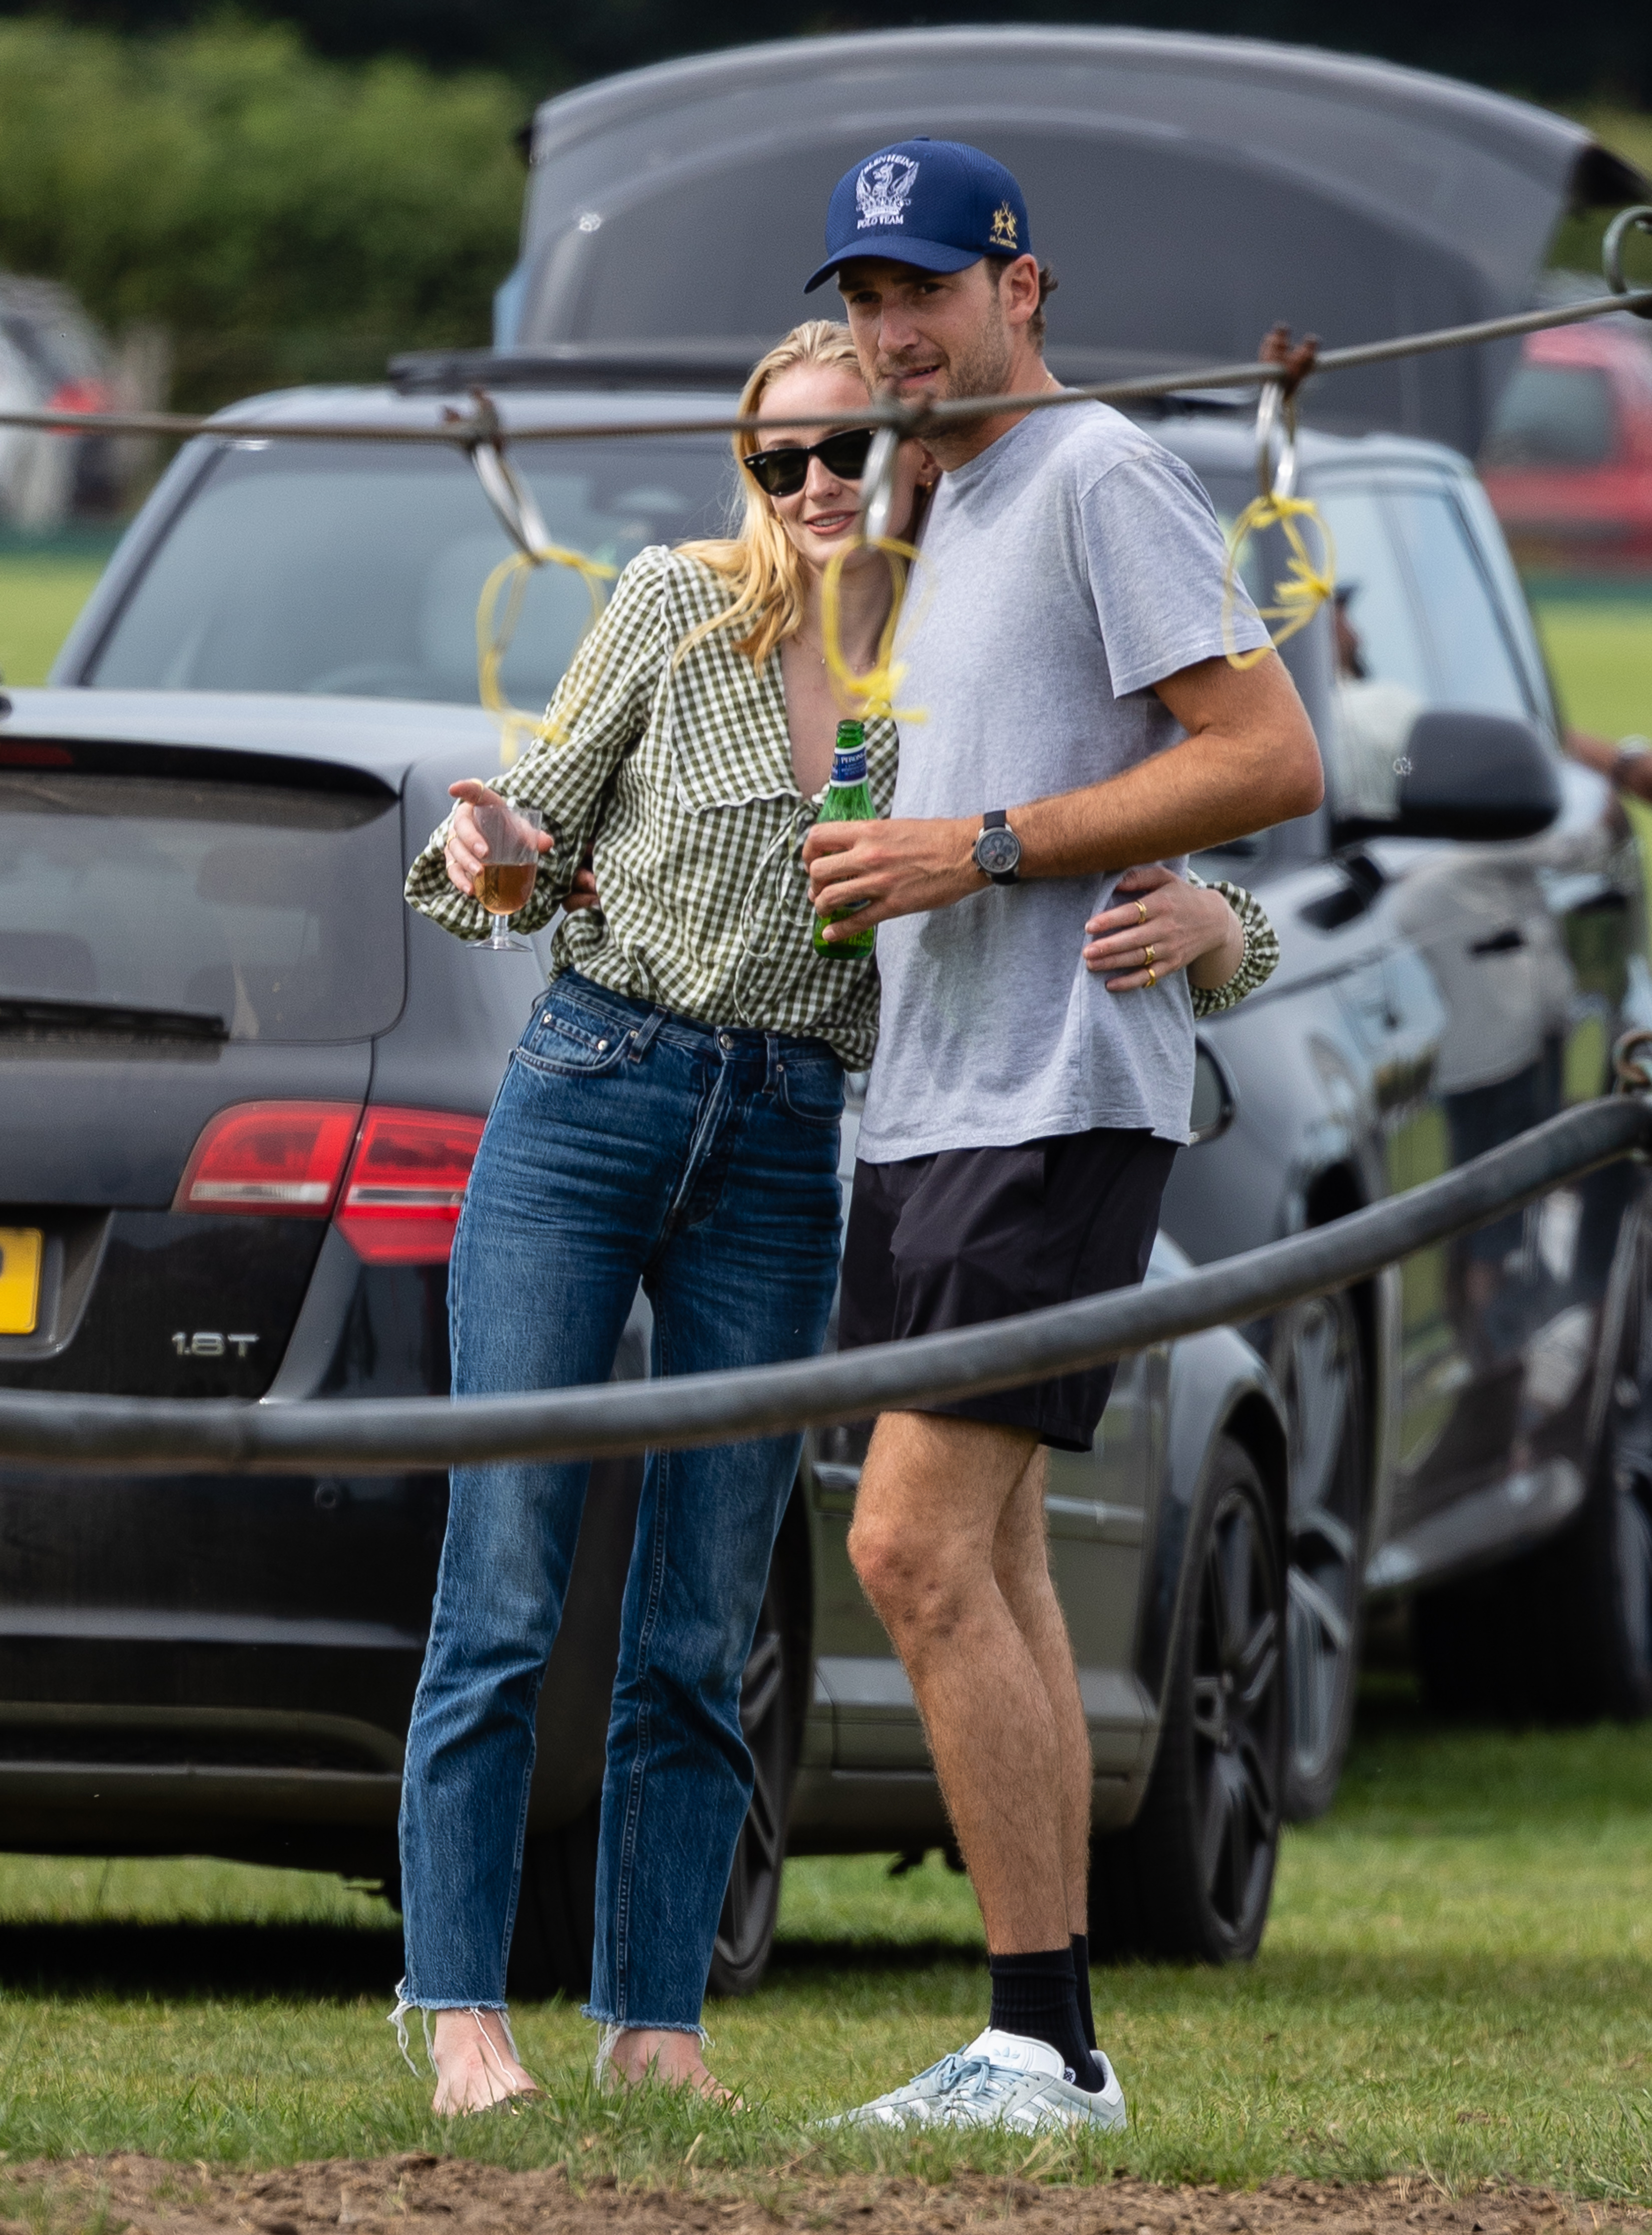 Sophie Turner with her boyfriend Peregrine Pearson.